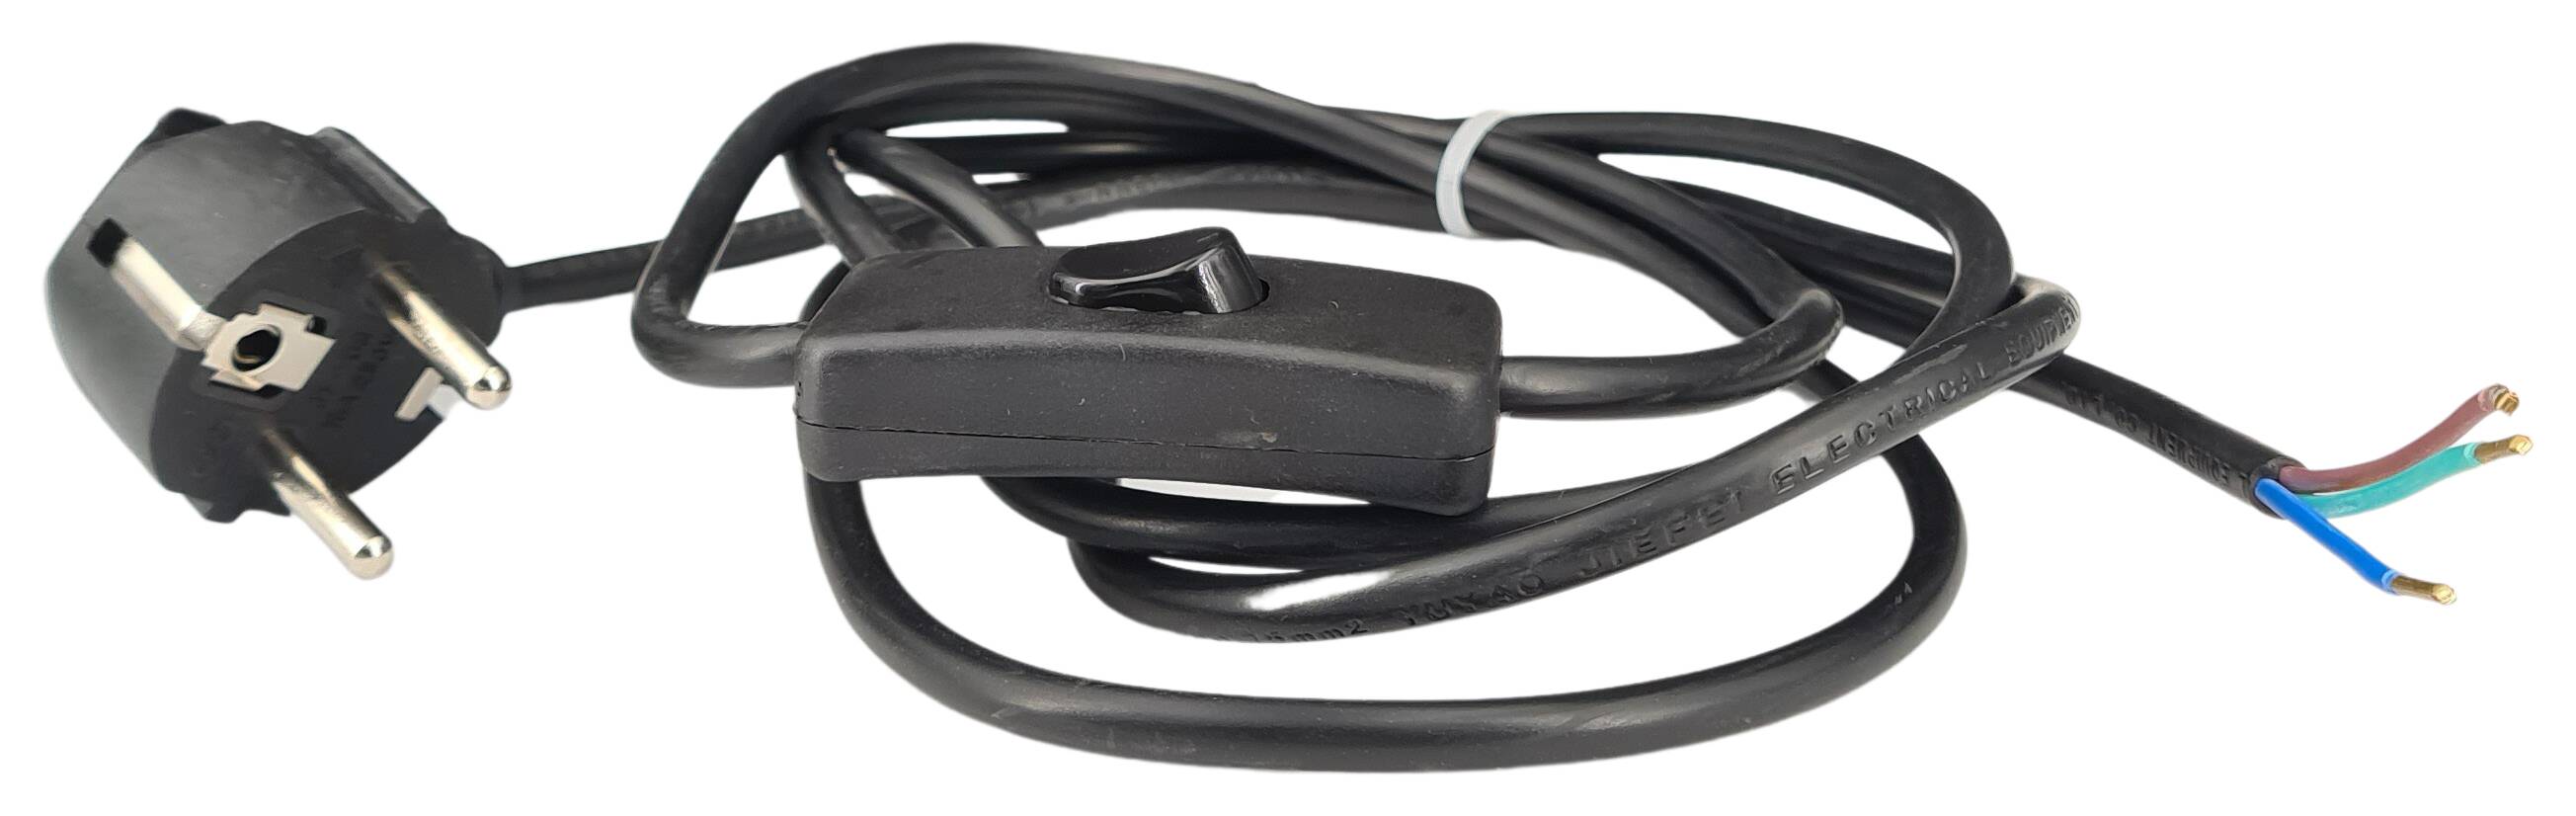 cord-set 3G 0,75/2500/1000 with schuko angled plug and intermediate switch black